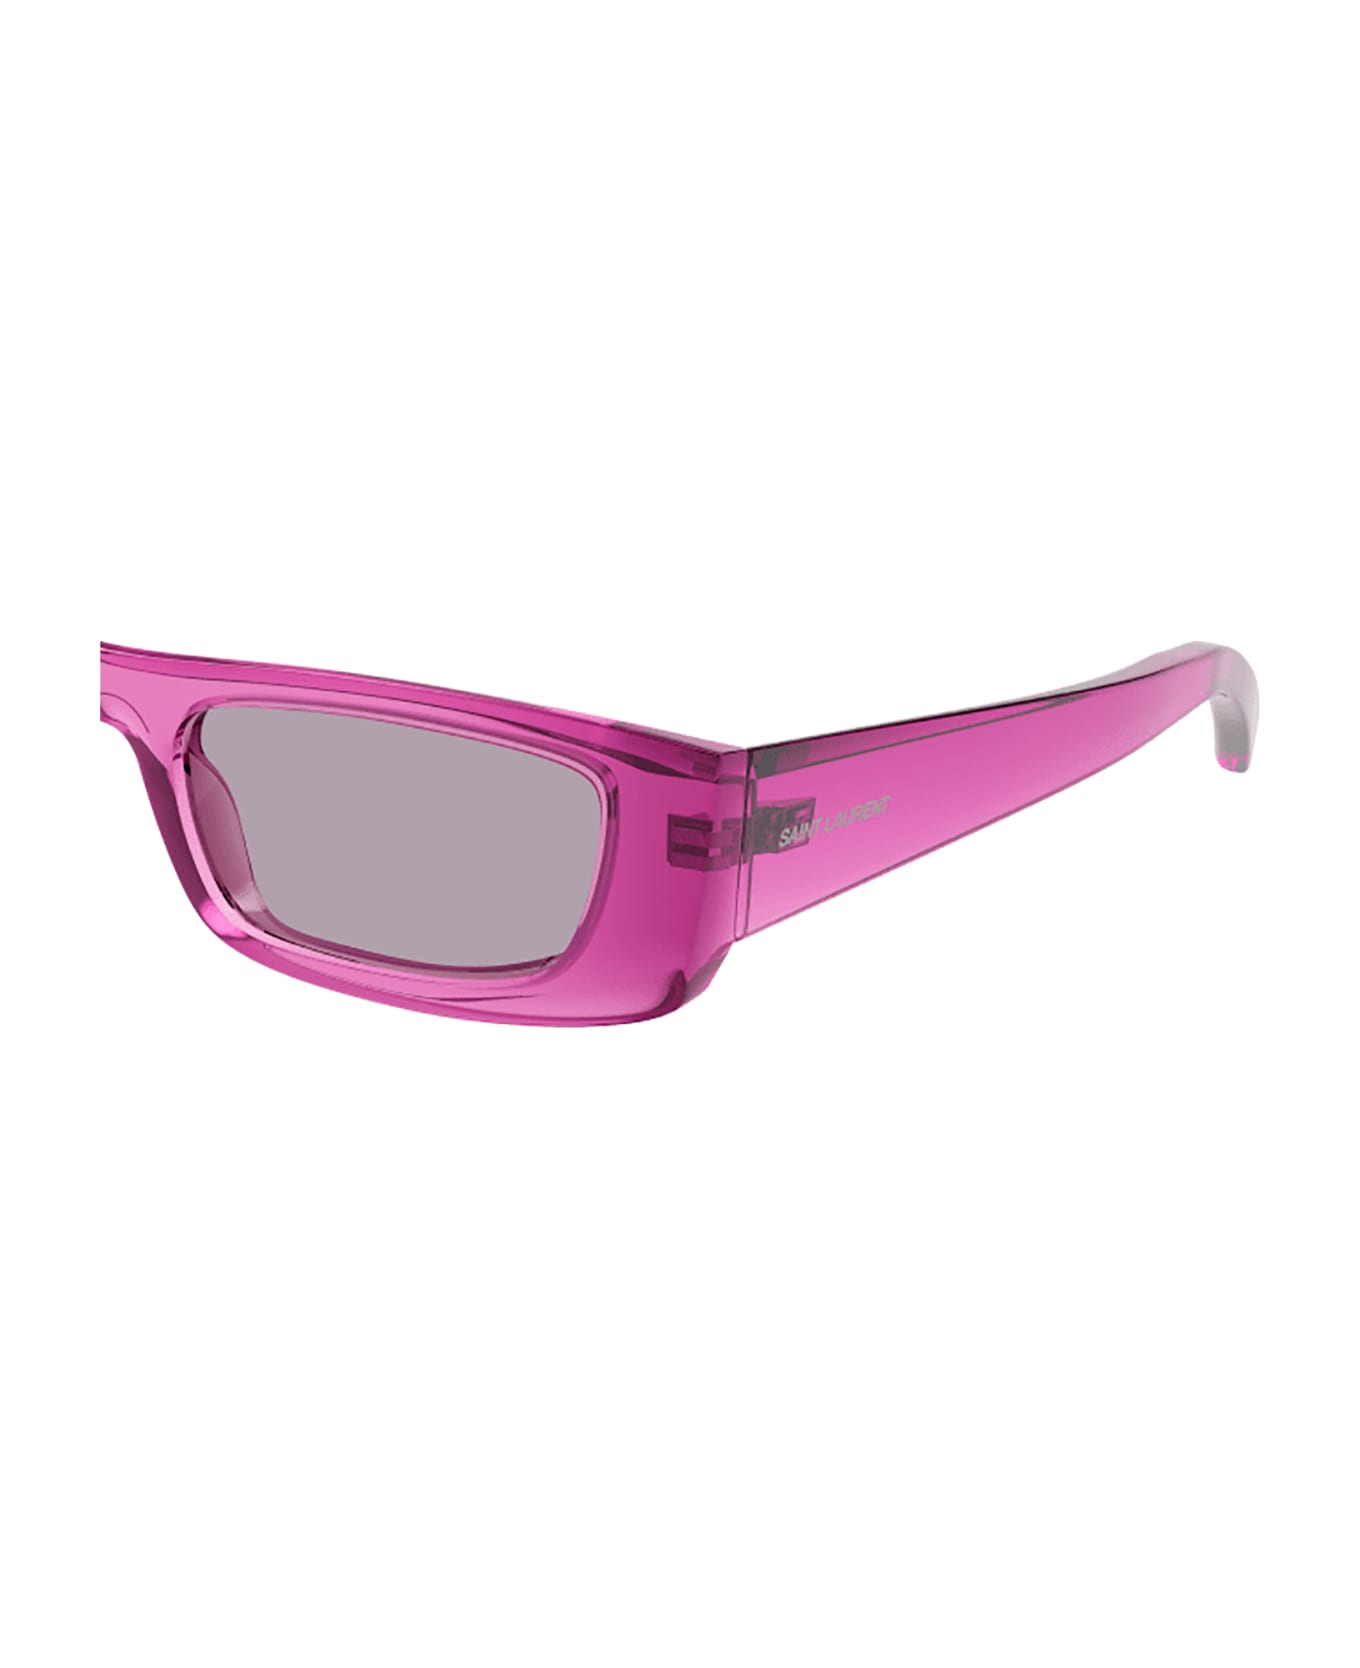 Saint Laurent Eyewear SL 553 Sunglasses - Pink Pink Violet